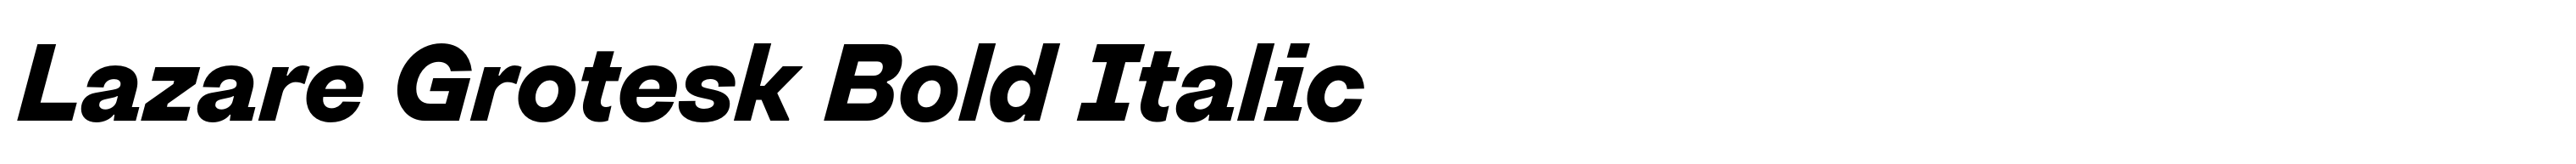 Lazare Grotesk Bold Italic